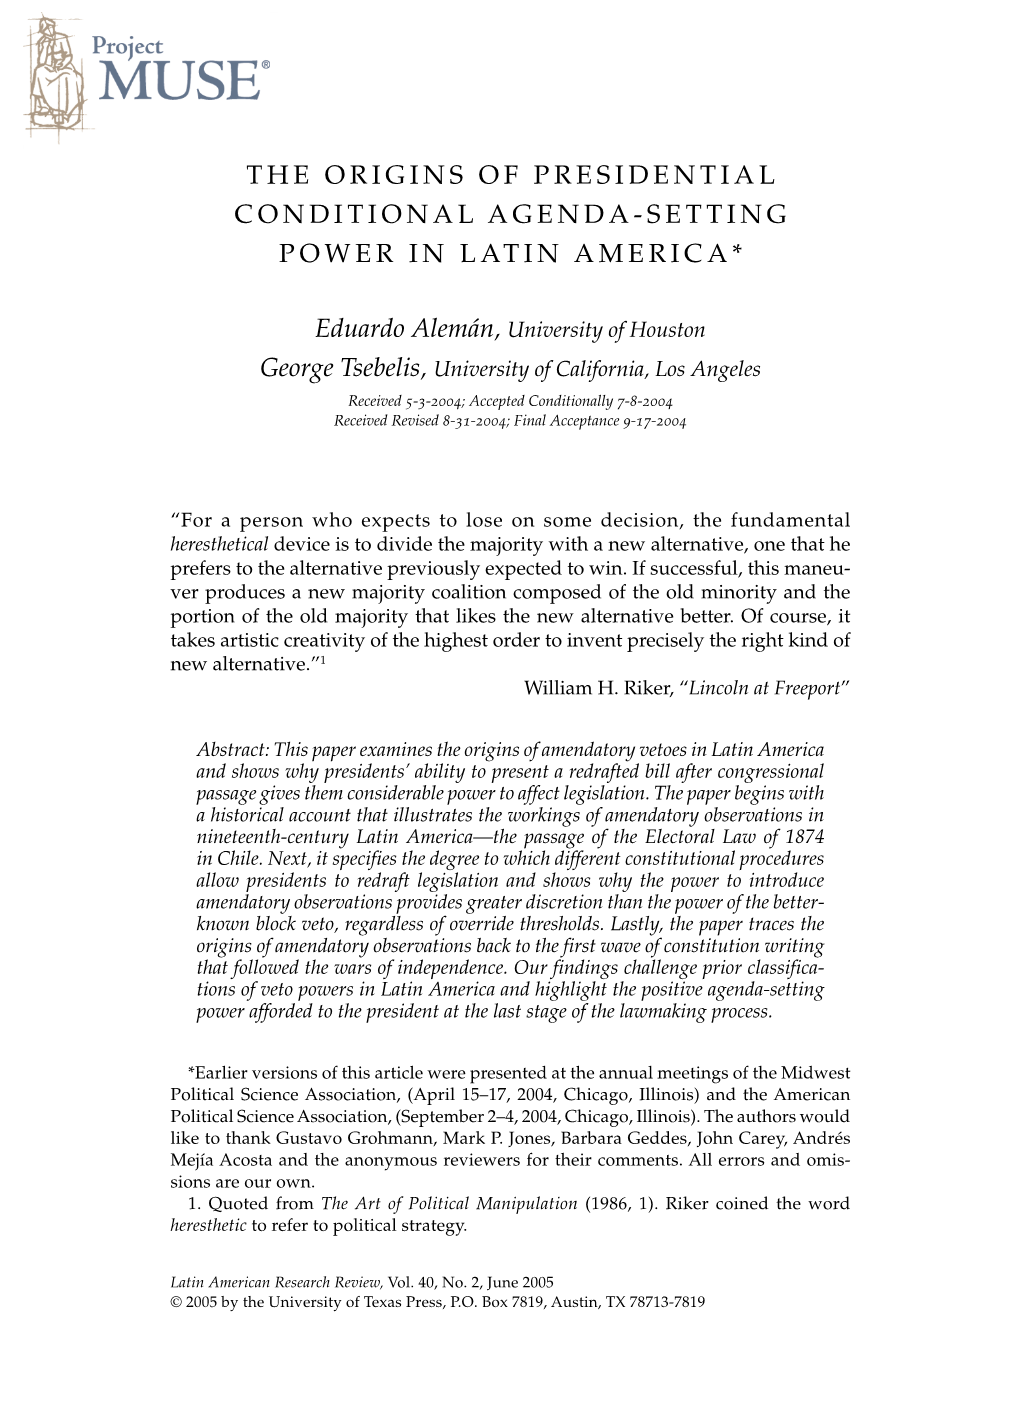 The Origins of Presidential Conditional Agenda-Setting Power in Latin America*